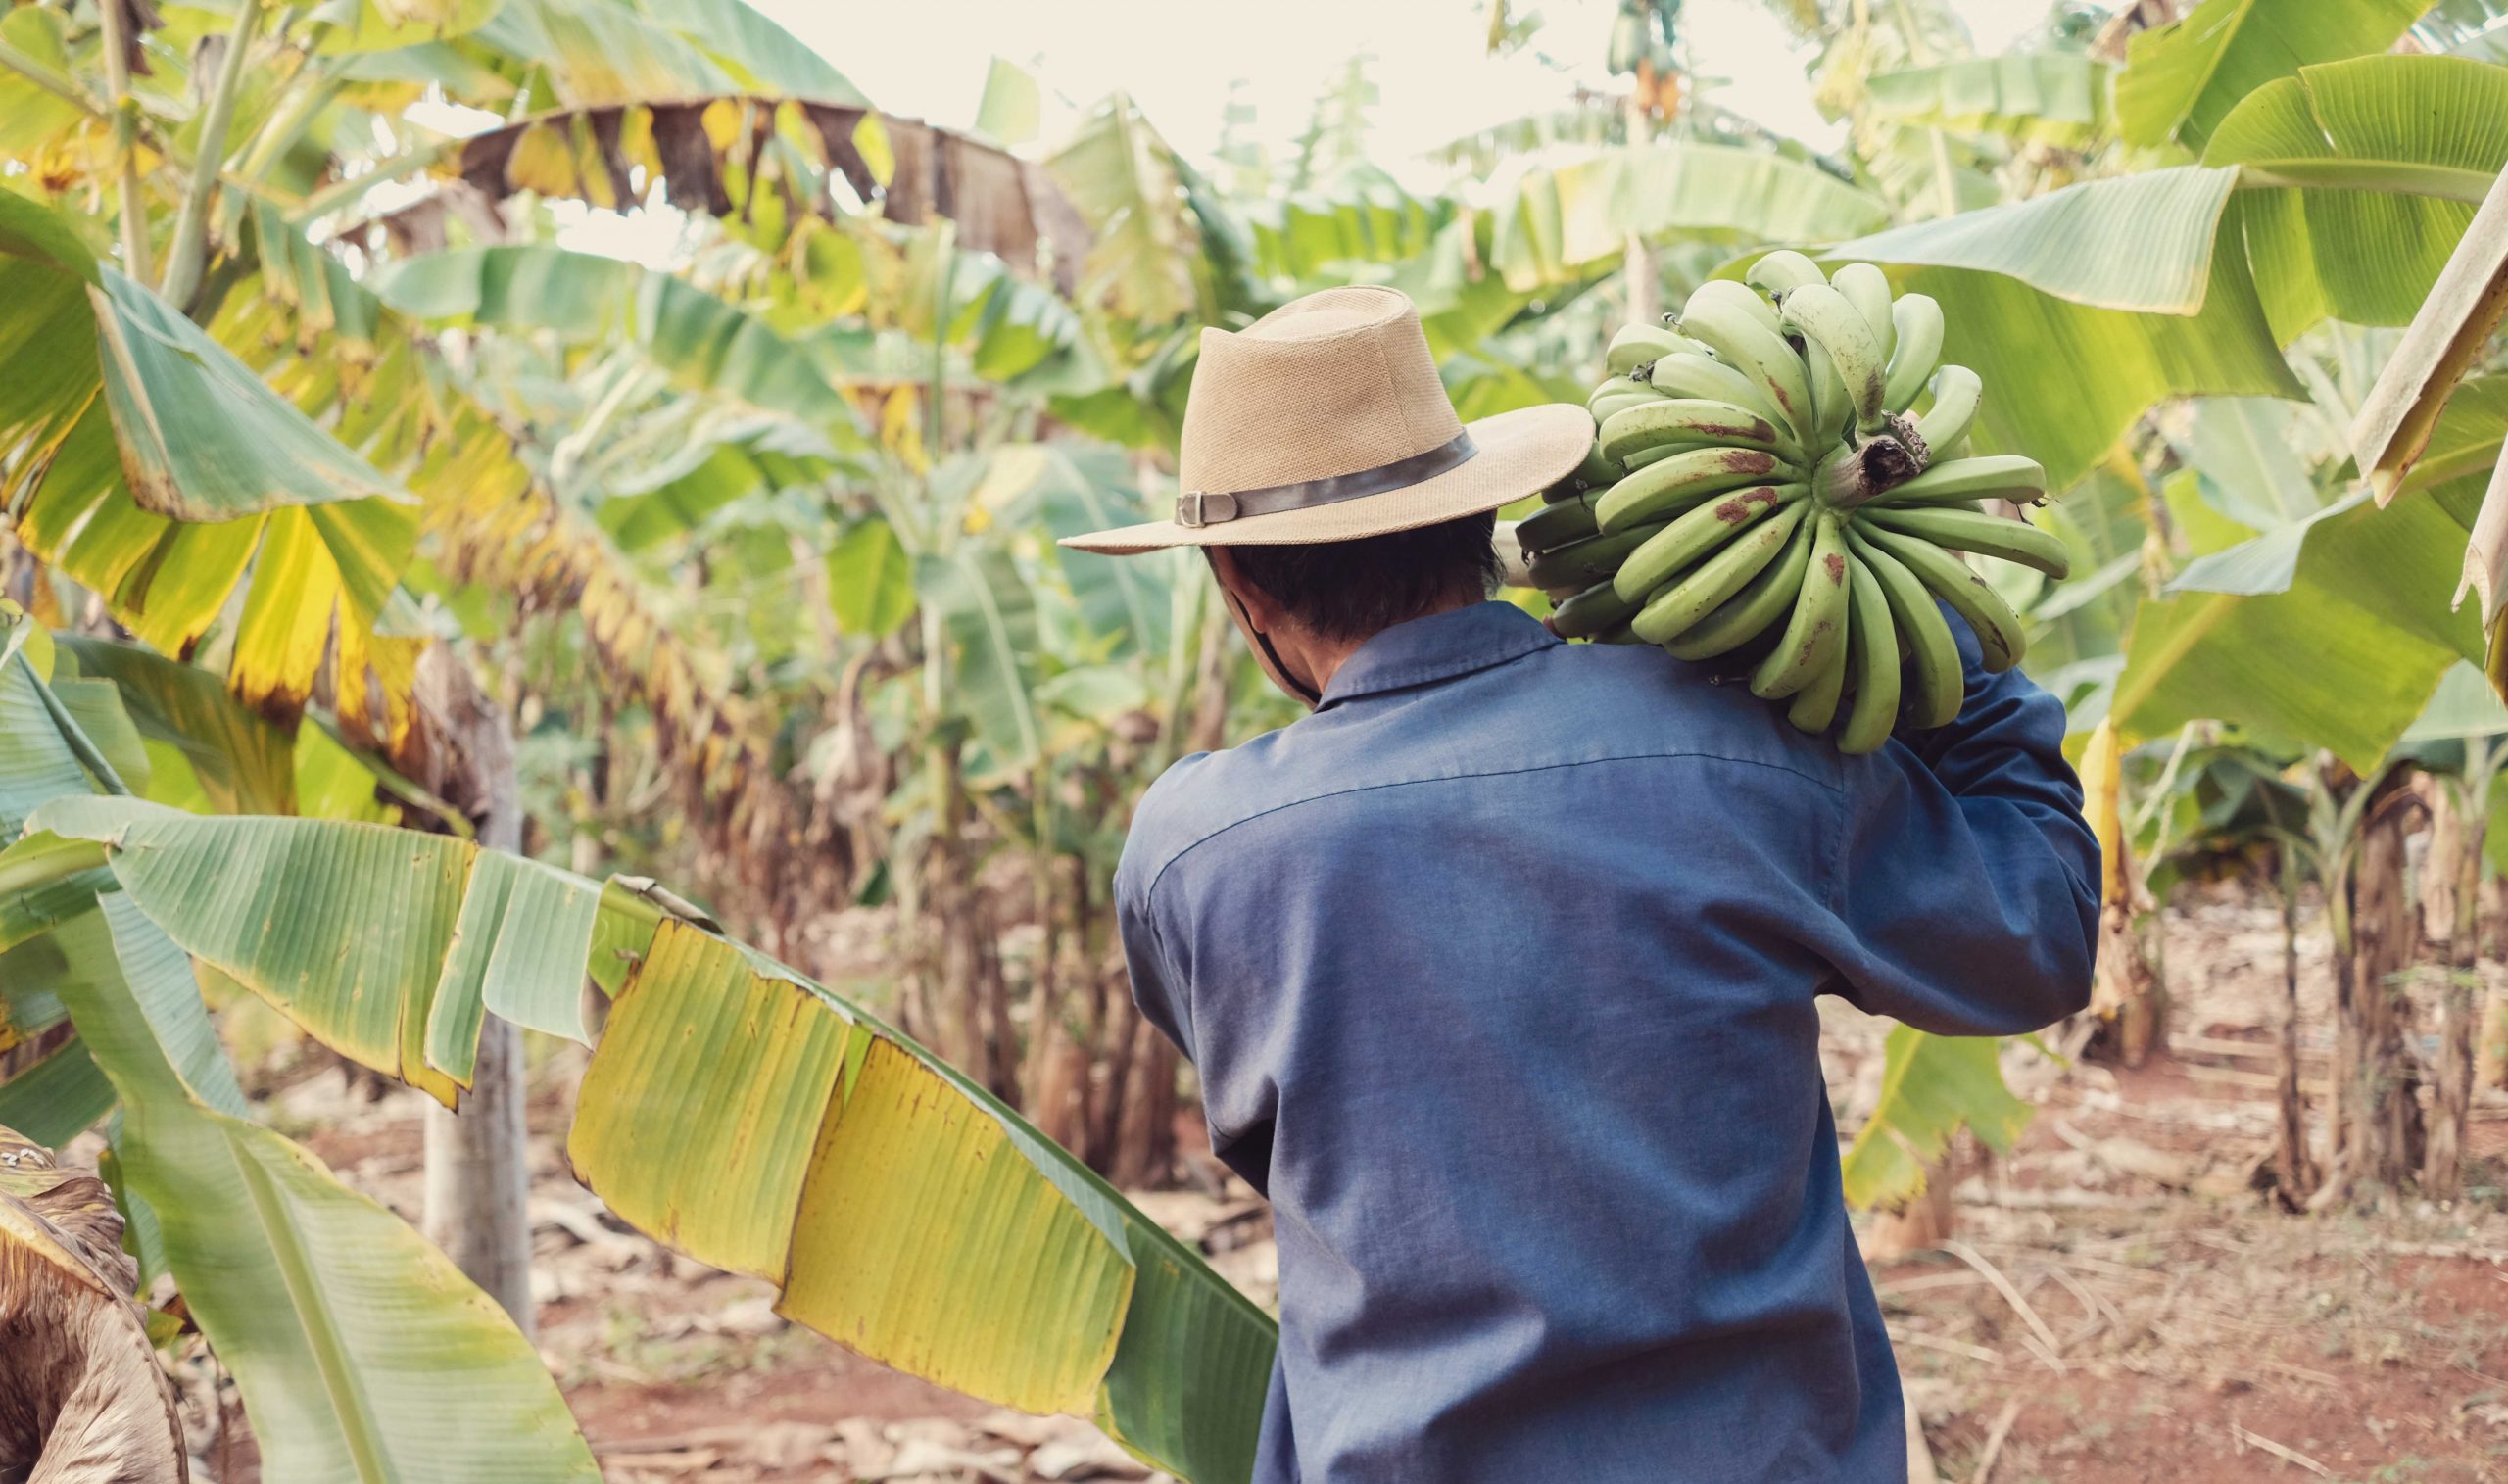 Banana harvest